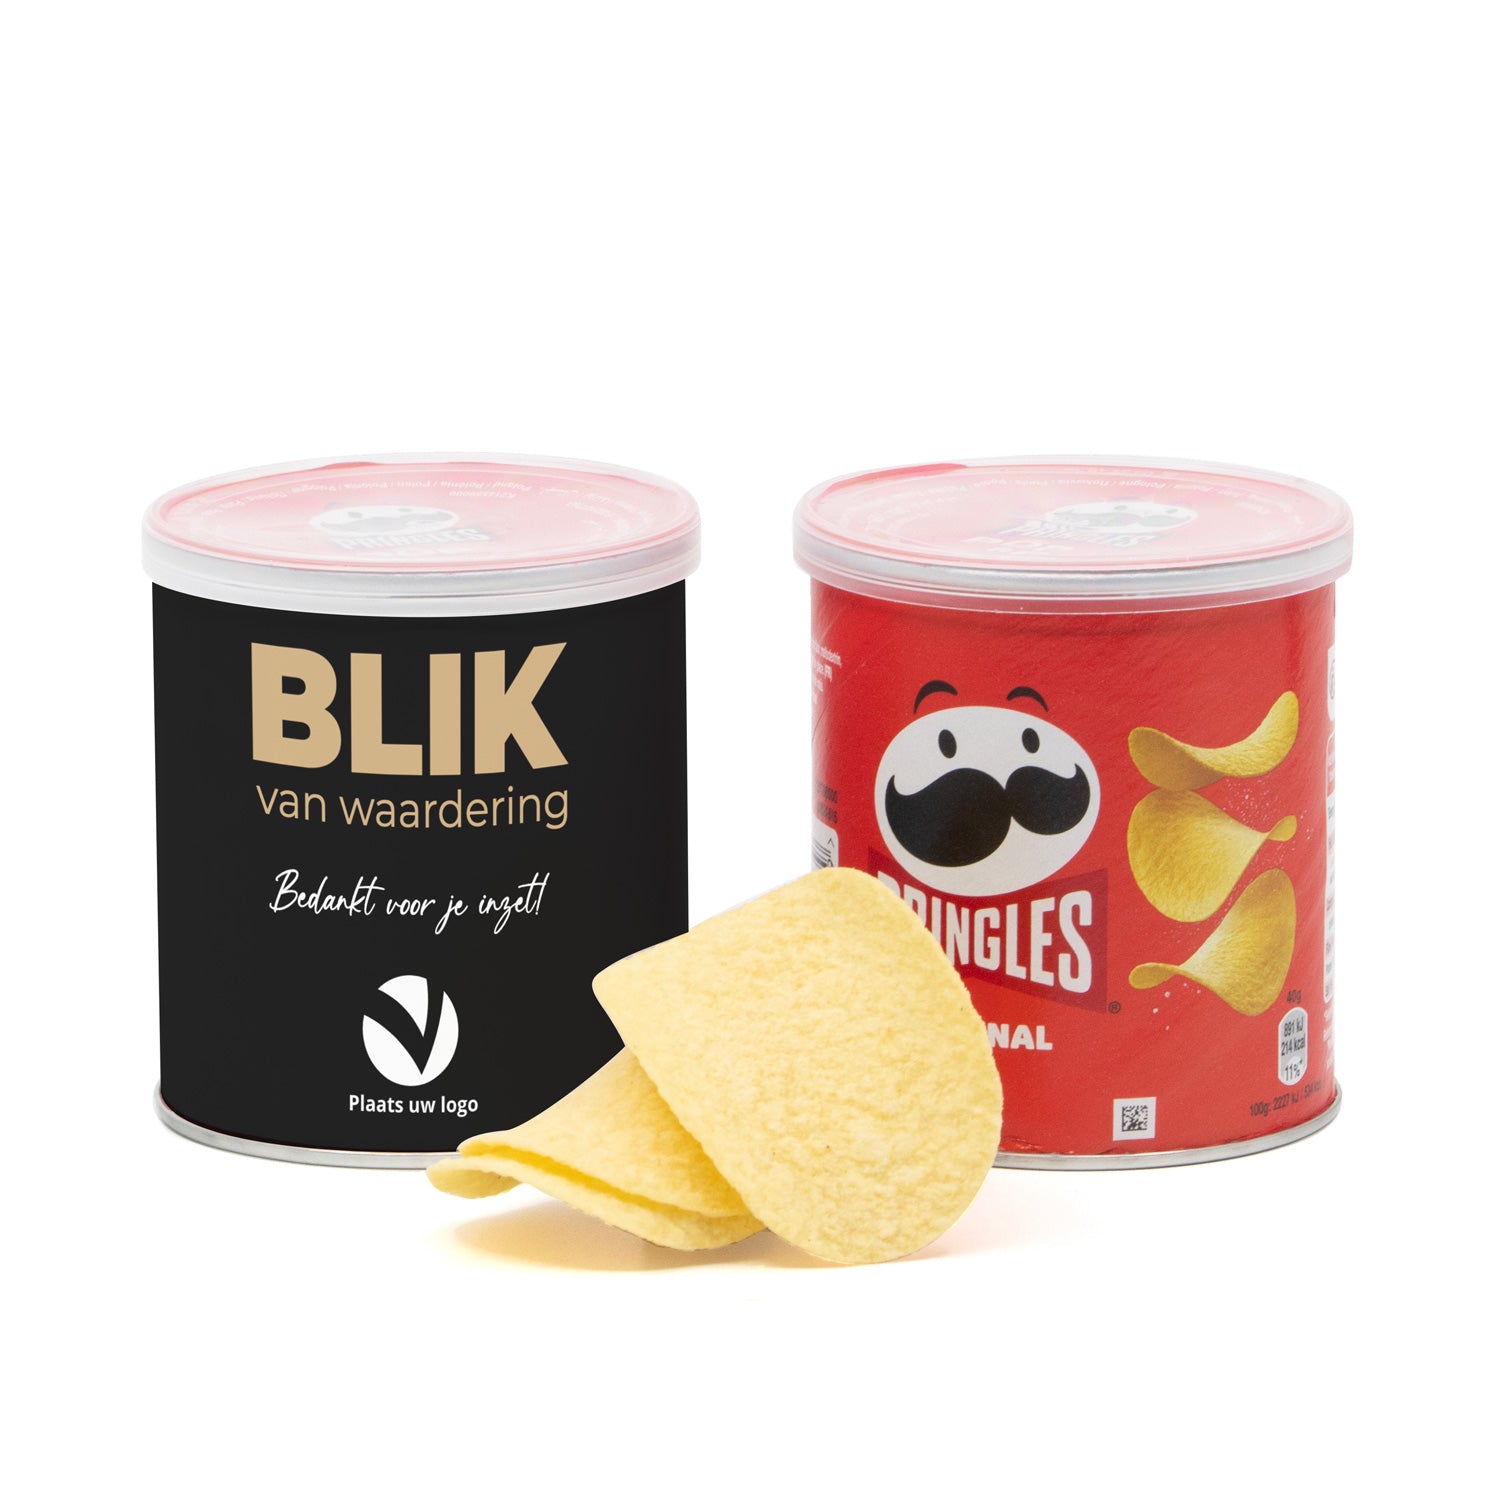 Pringles chipsblikje met eigen wikkel 40 gram - Zakelijk - Bedankjes.nl